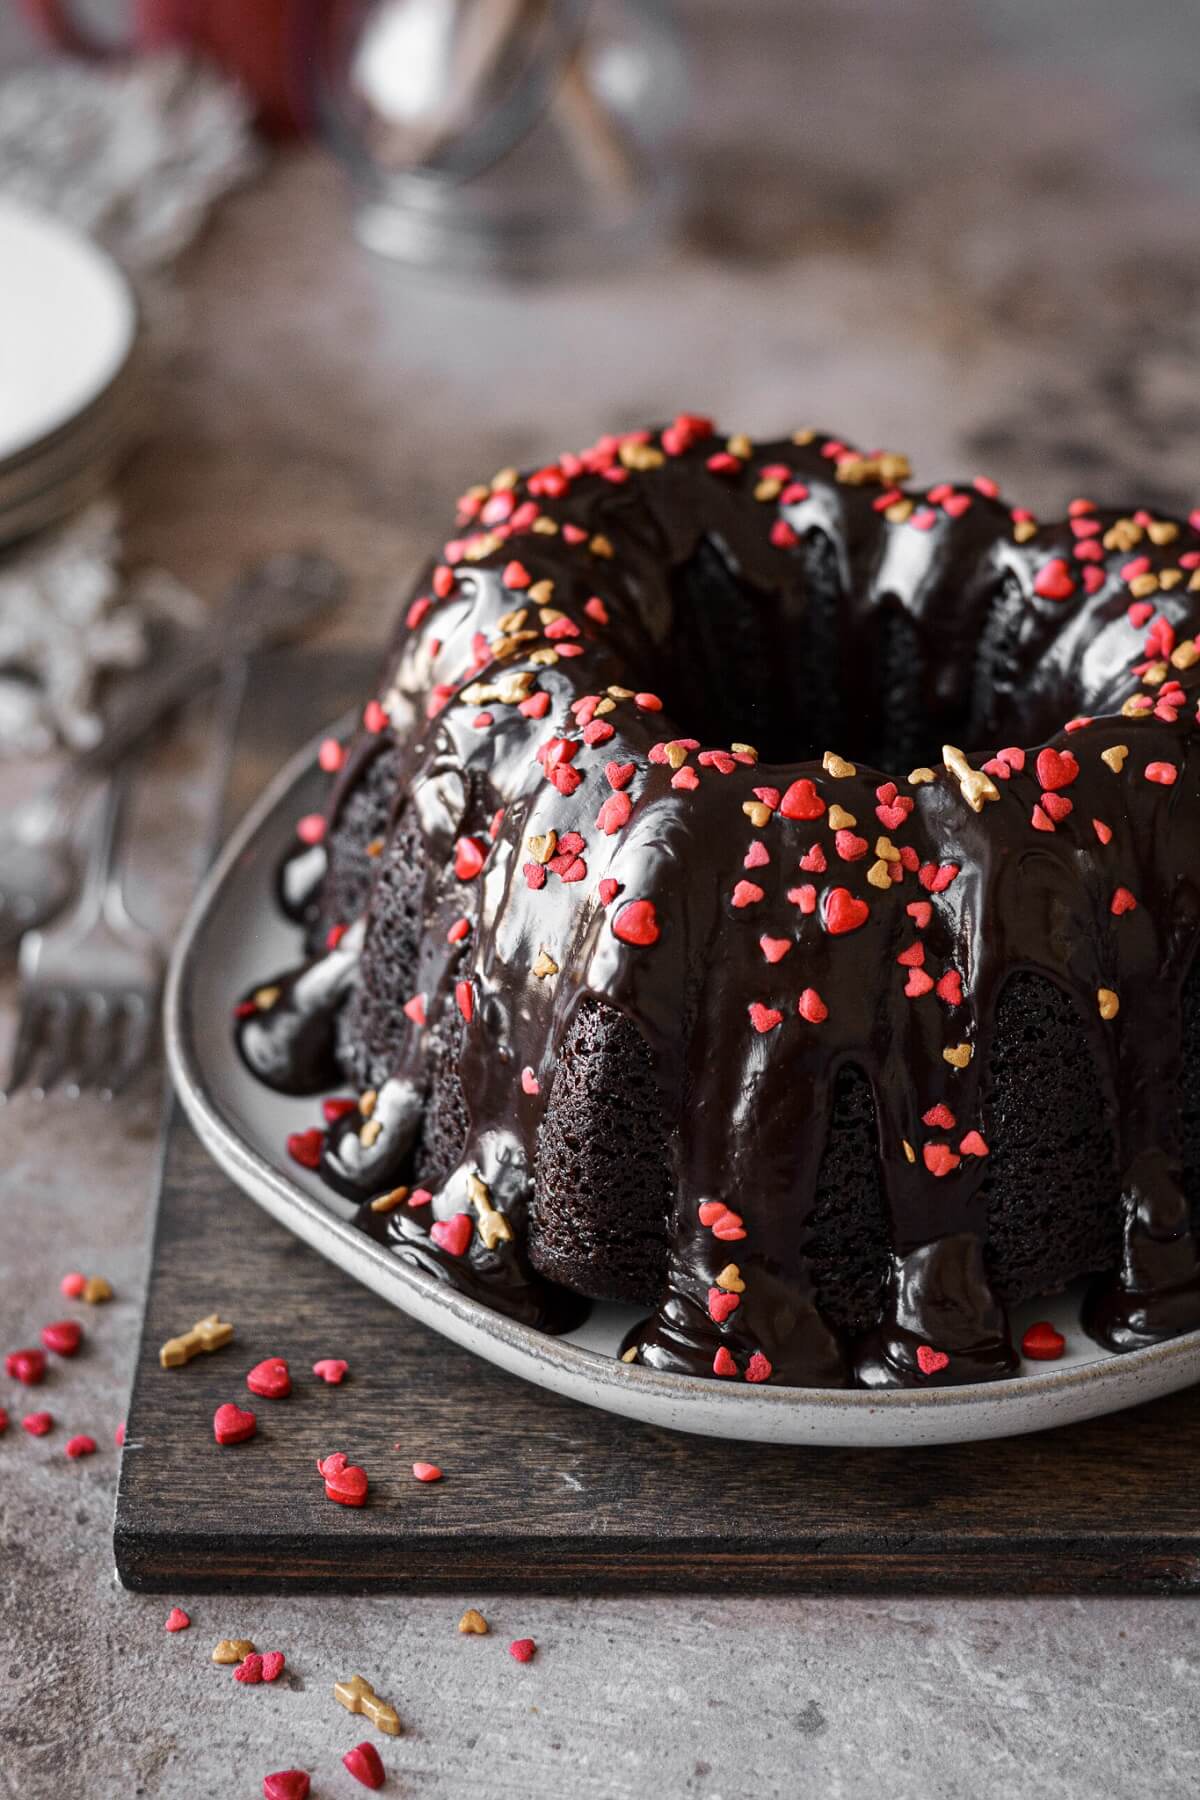 Heart sprinkles and ganache on a chocolate bundt cake.